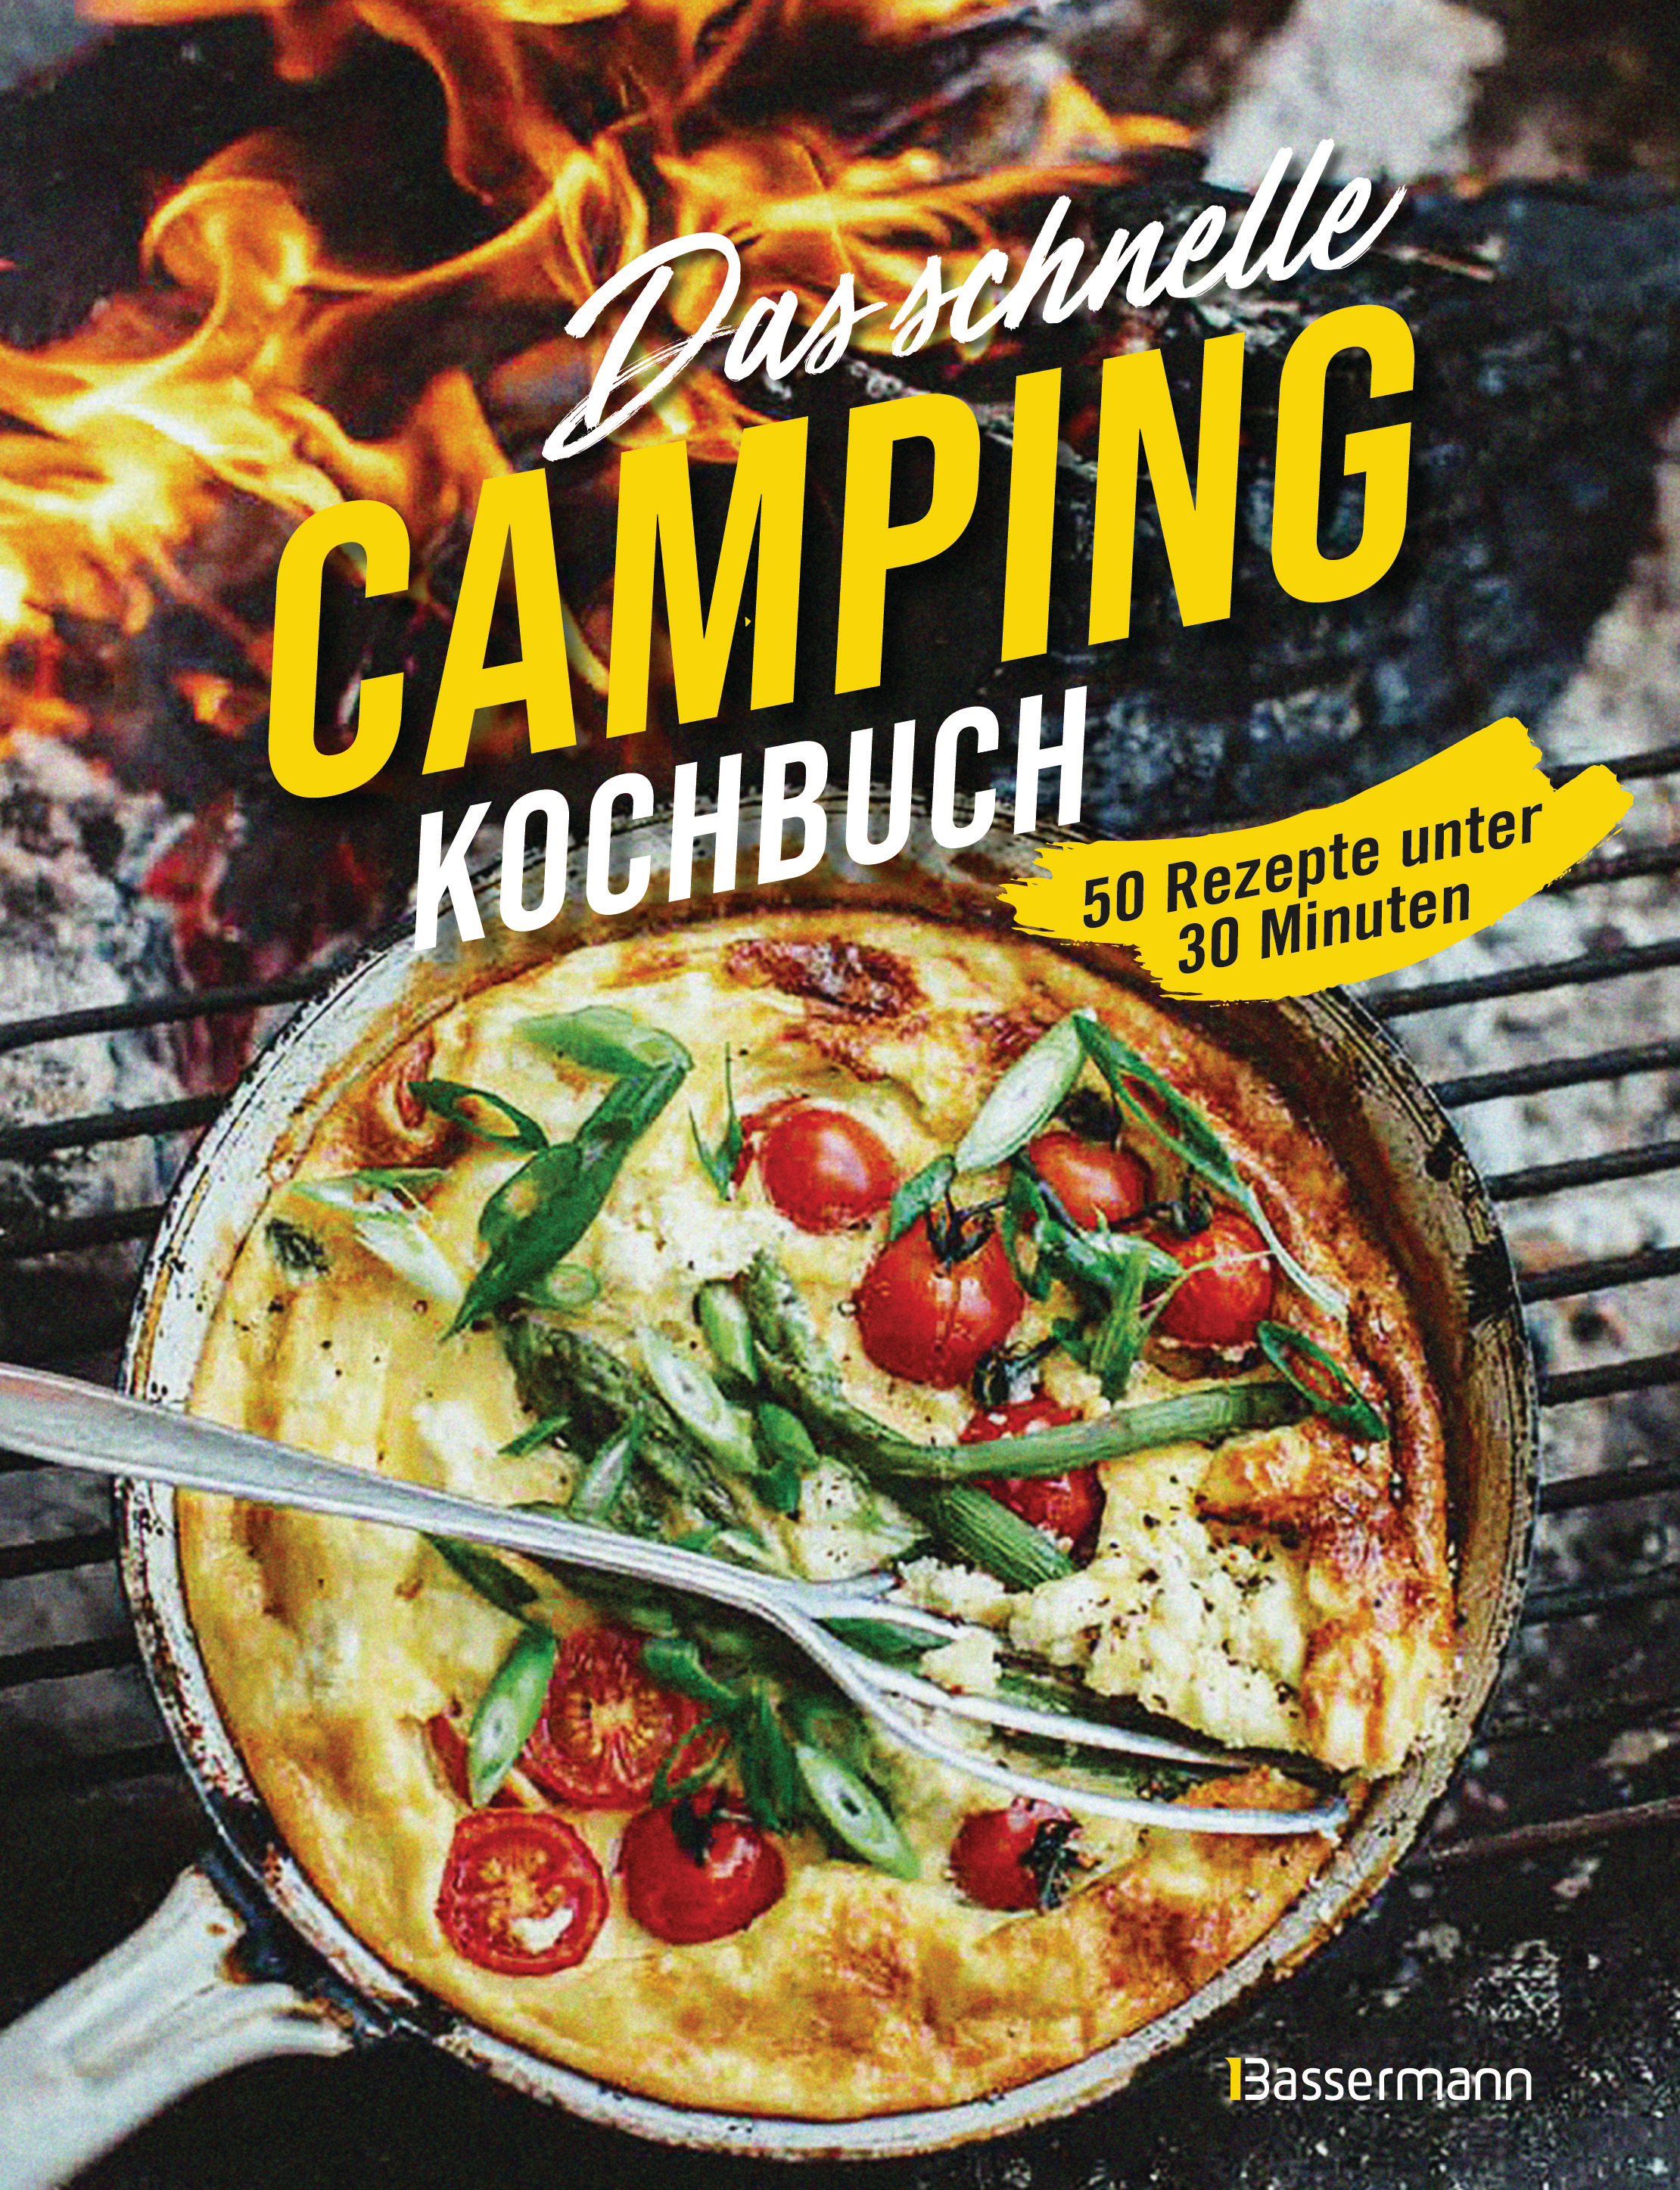 9-camping-kueche-kochen-kochbuch-dometic-caretta-teardrop